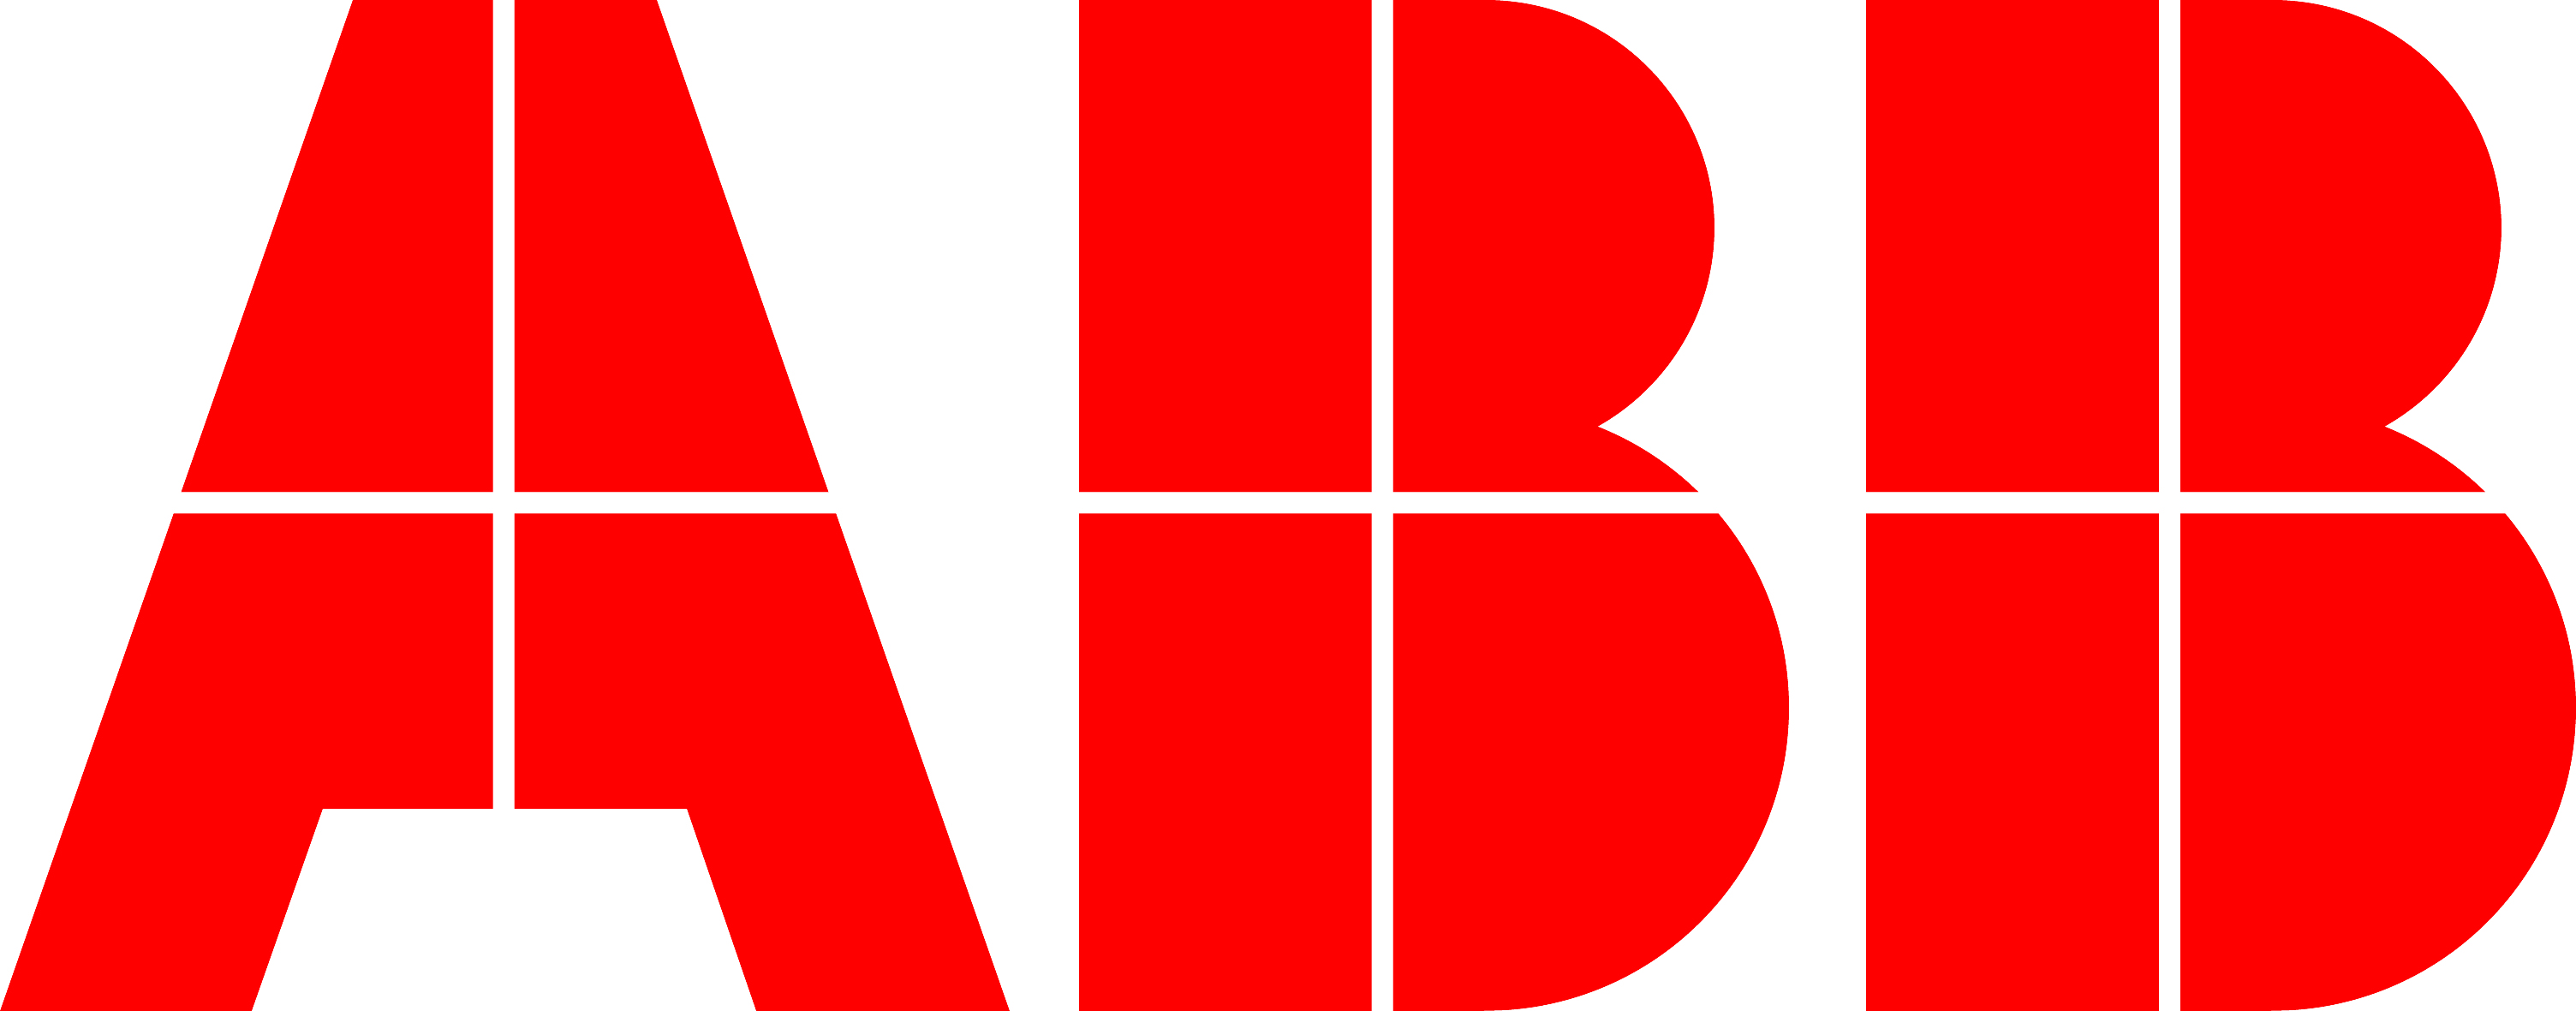 Fabricant de robots industriels, partenaire d'ASM - ABB 